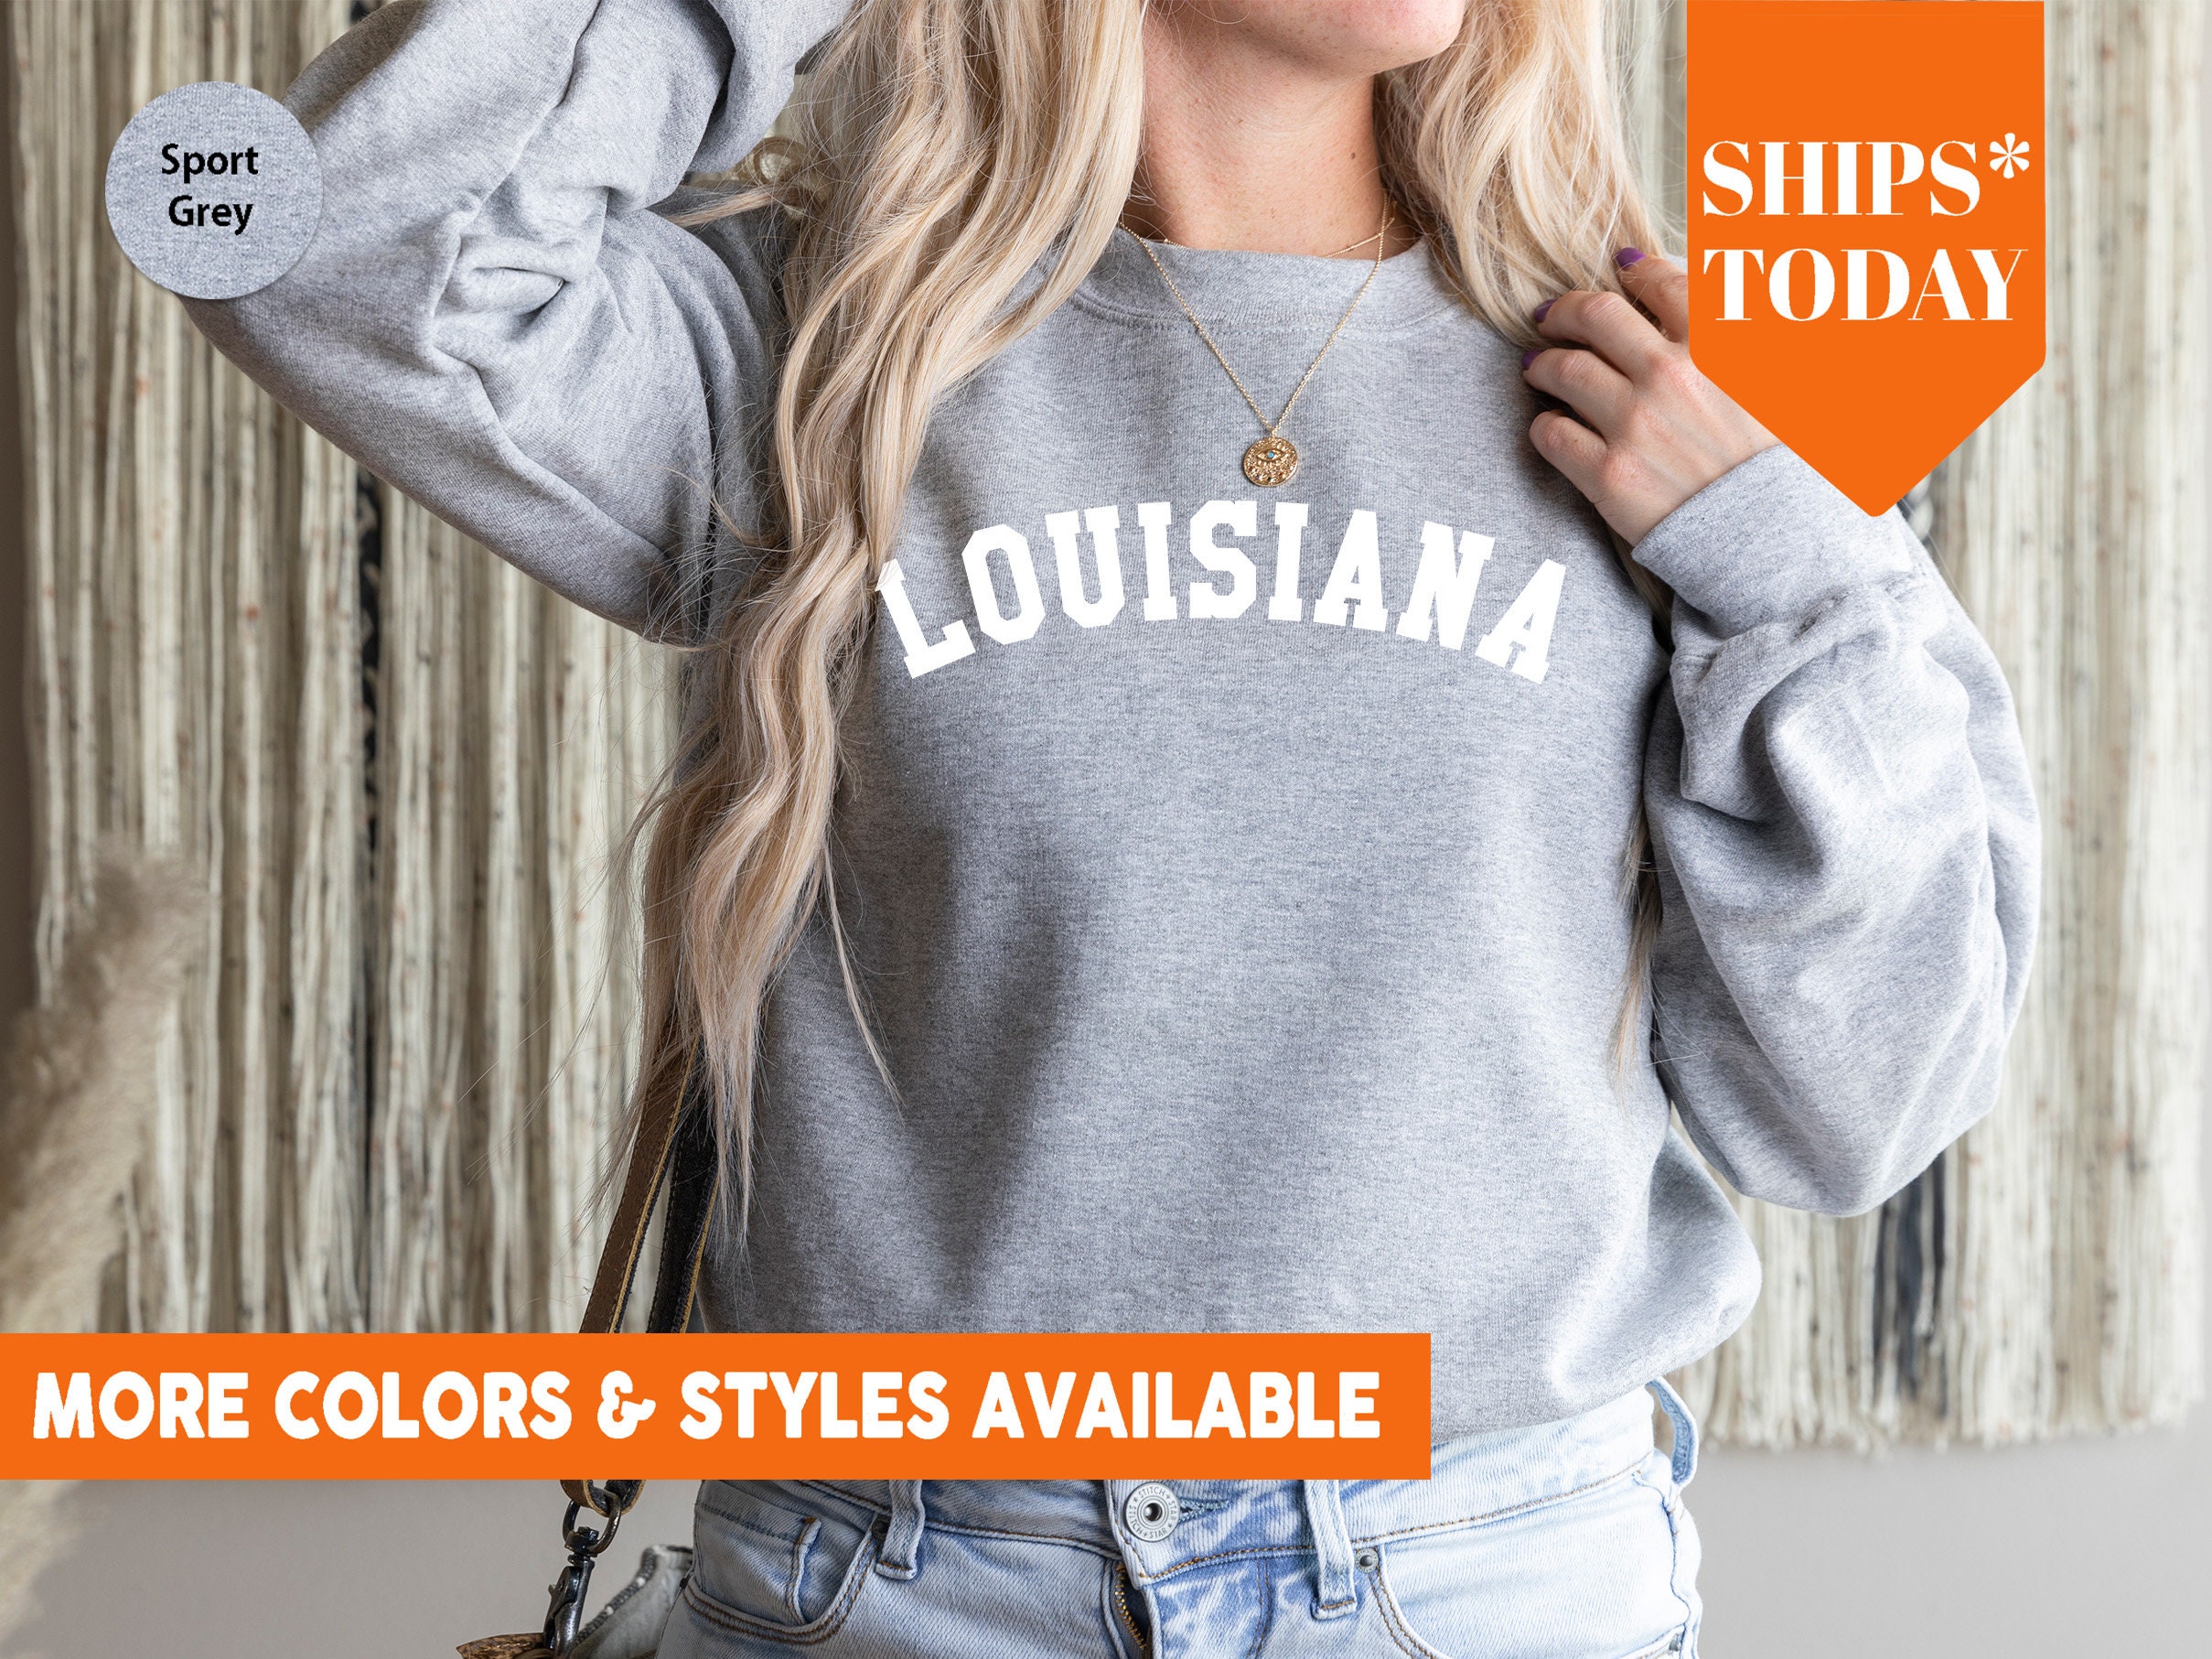 Louisiana Hoodie: Louisiana Hooded Sweatshirt / College Style 